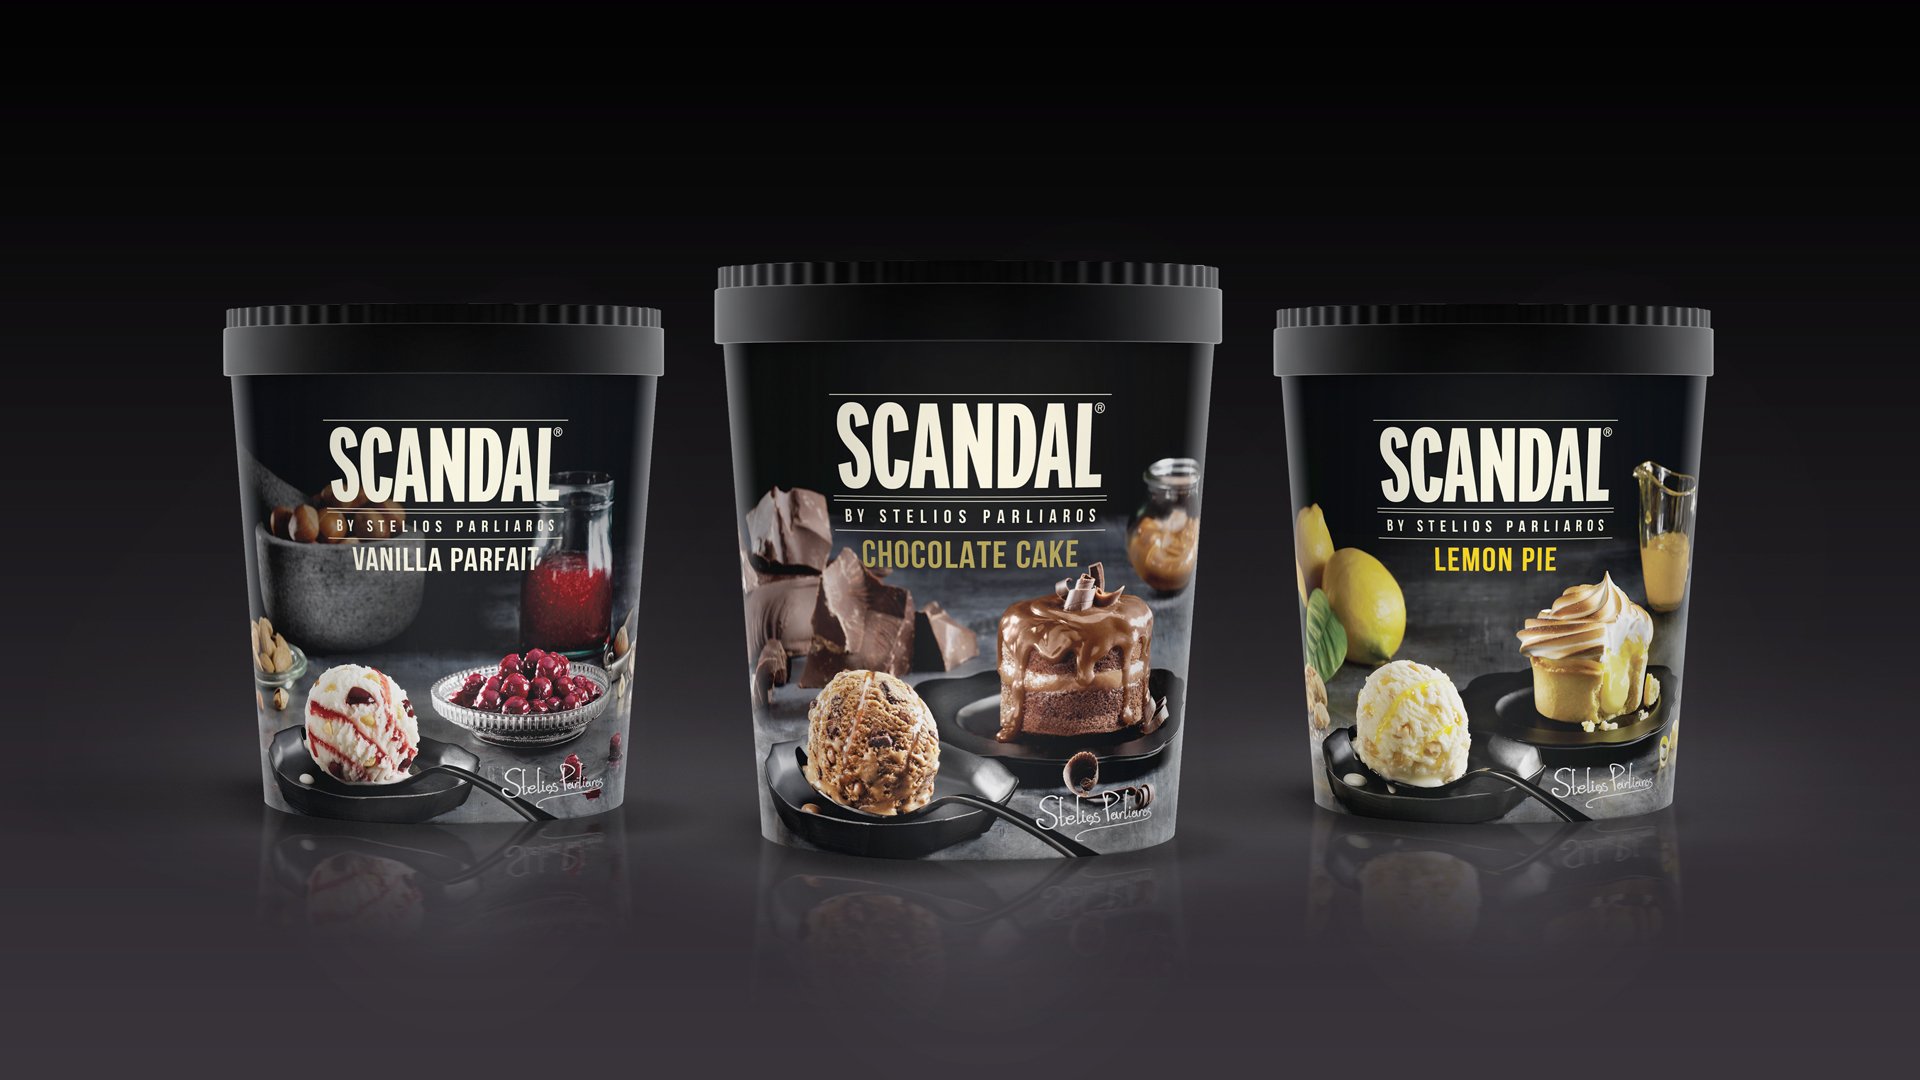 Scandal ice creams by Stelios Parliaros product portfolio